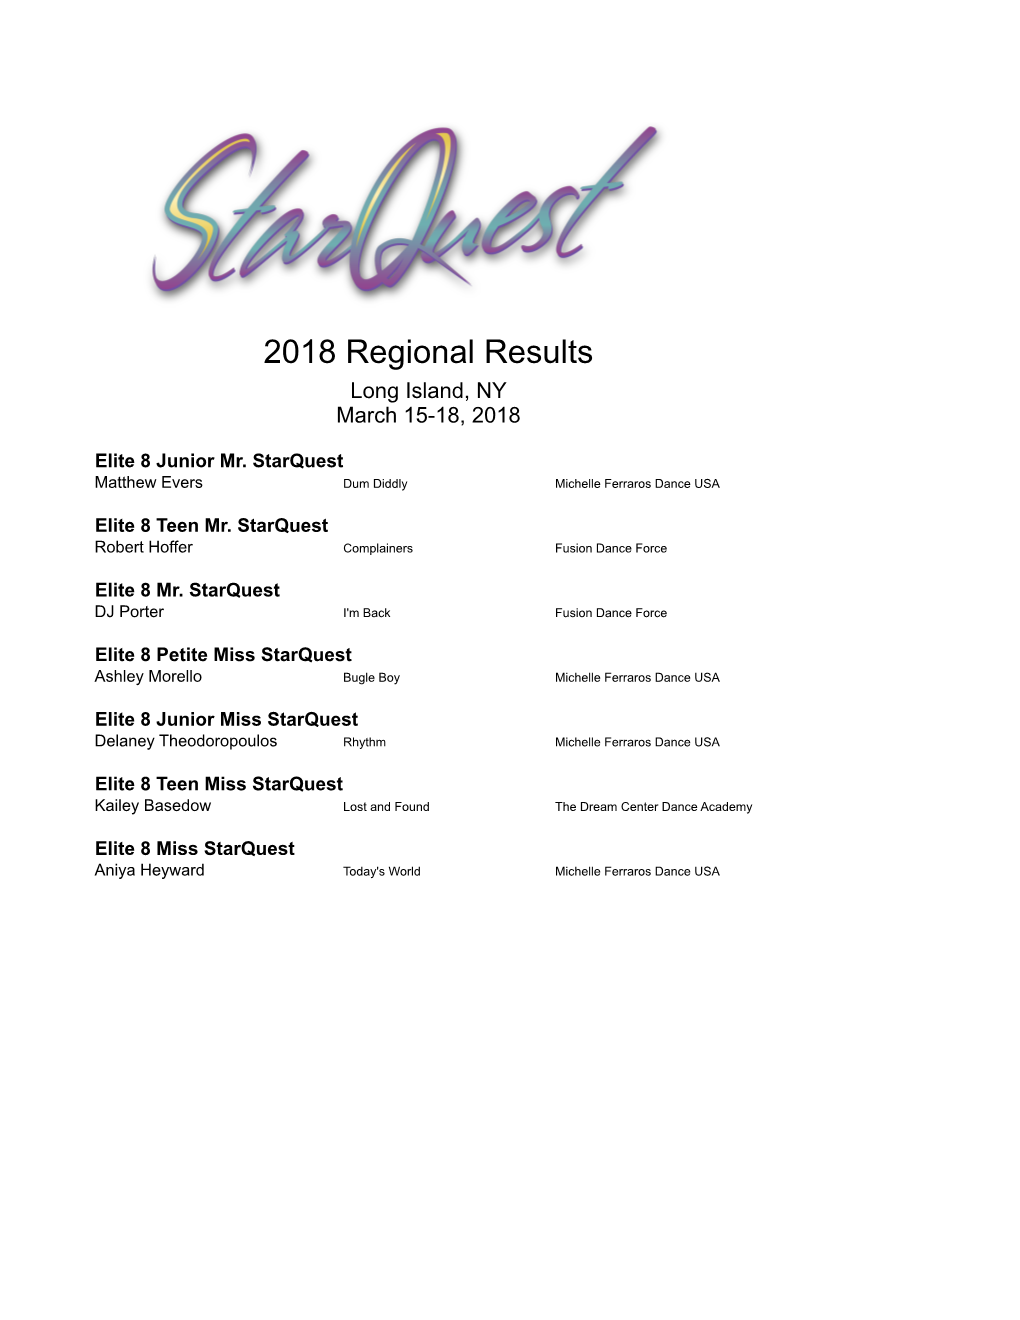 2018 Regional Results Long Island, NY March 15-18, 2018